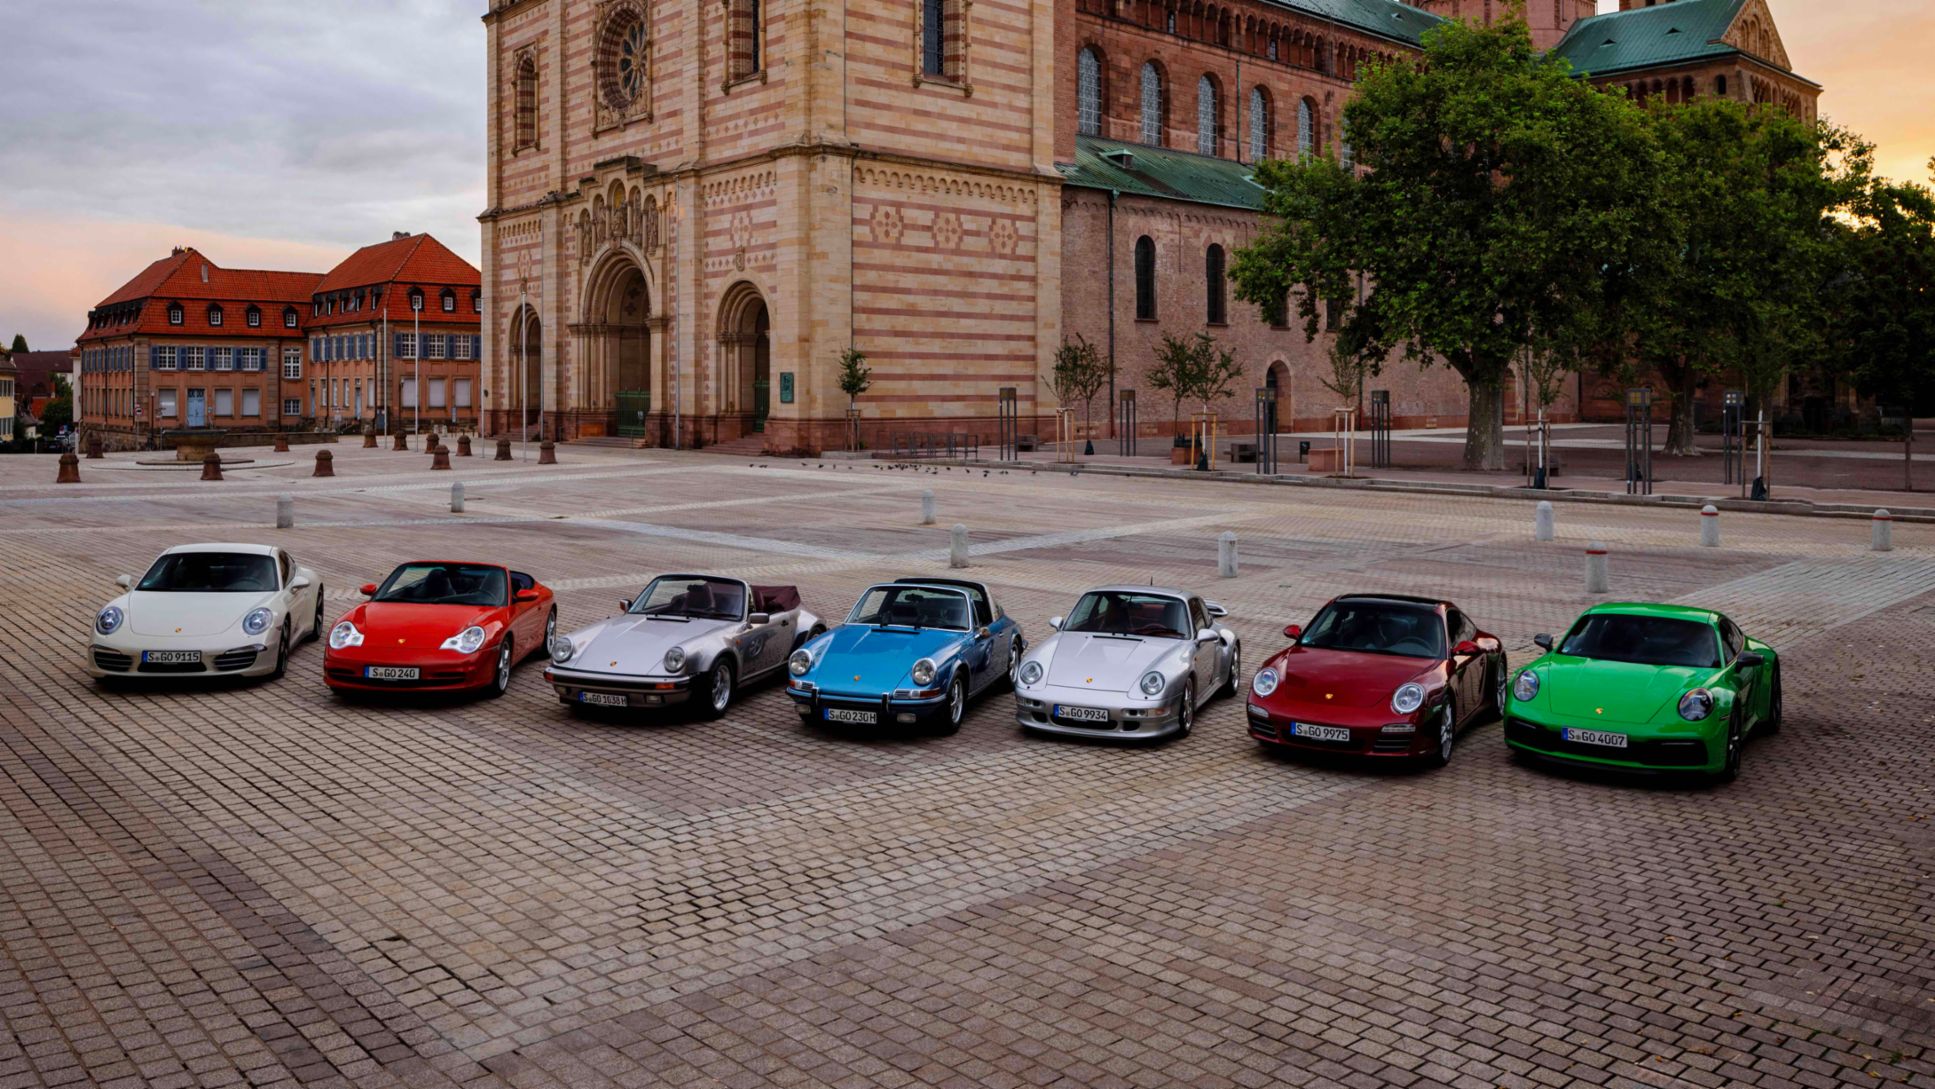 911 Carrera S "50 Jahre 911" (991), 911 Carrera 4 Cabriolet (996), 911 Carrera 3.2 Cabriolet Turbolook, 911 S 2.2 Targa, 911 Targa 4S (997), 911 Carrera T, Dom zu Speyer, Porsche Heritage Experience, 2023, Porsche AG